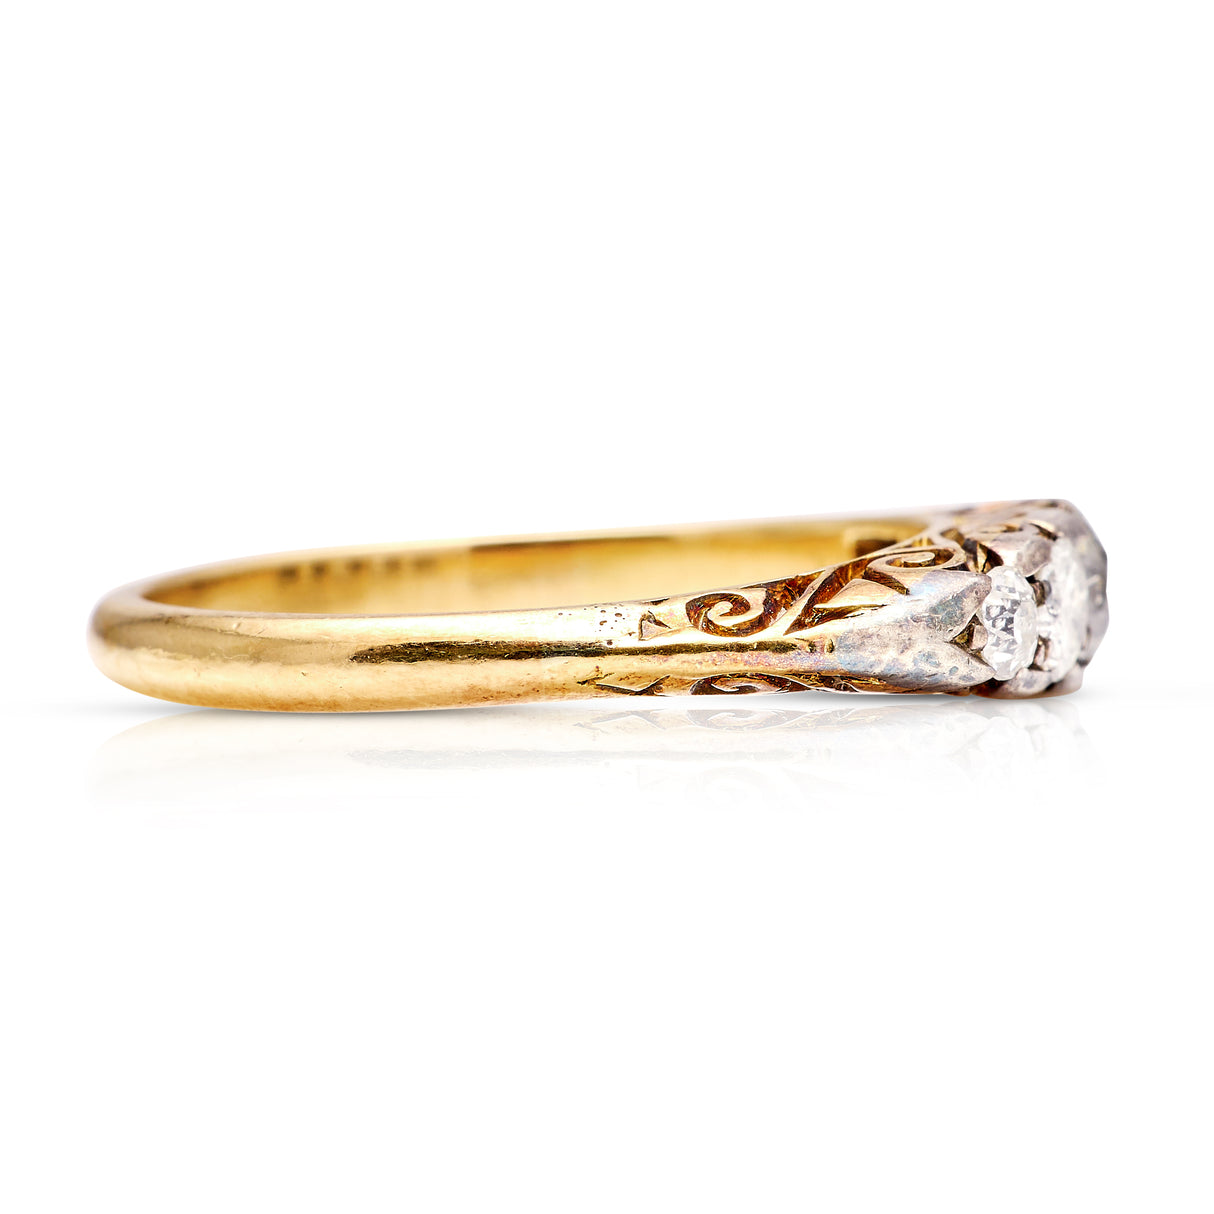 Antique, Edwardian Five-Stone Diamond Ring, 18ct Yellow Gold and Plati ...